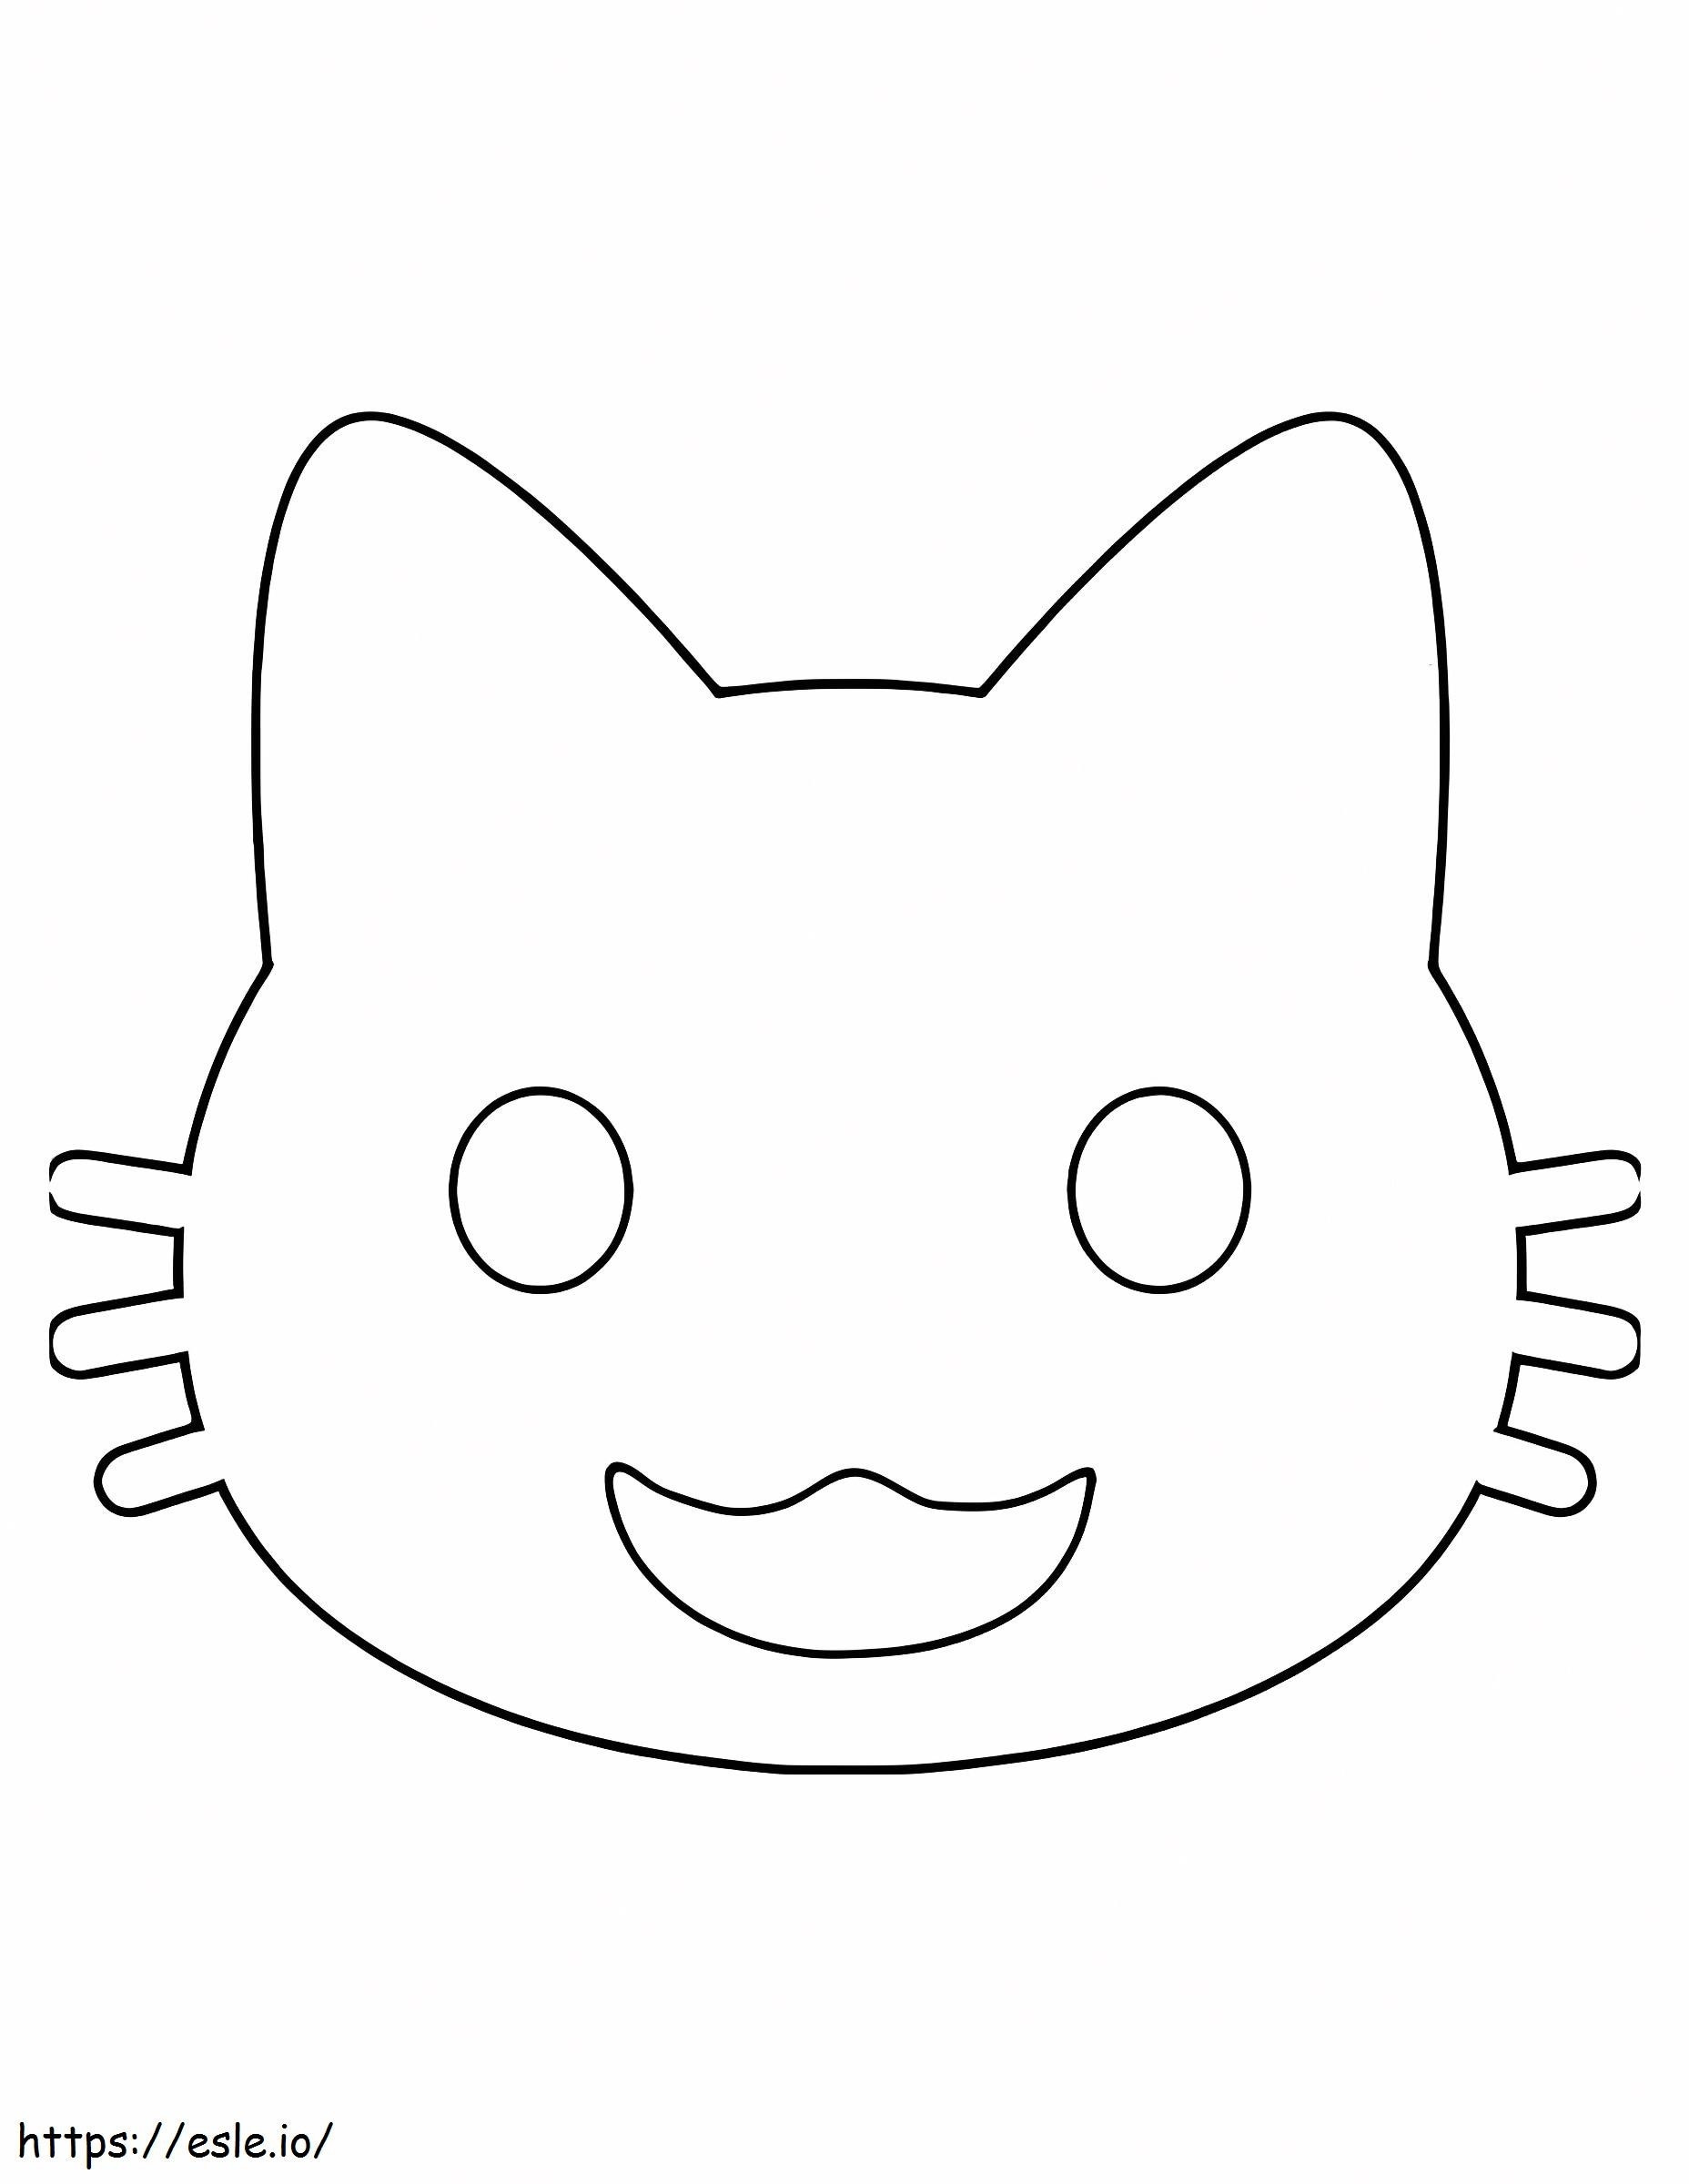 Coloriage Emoji chat drôle à imprimer dessin